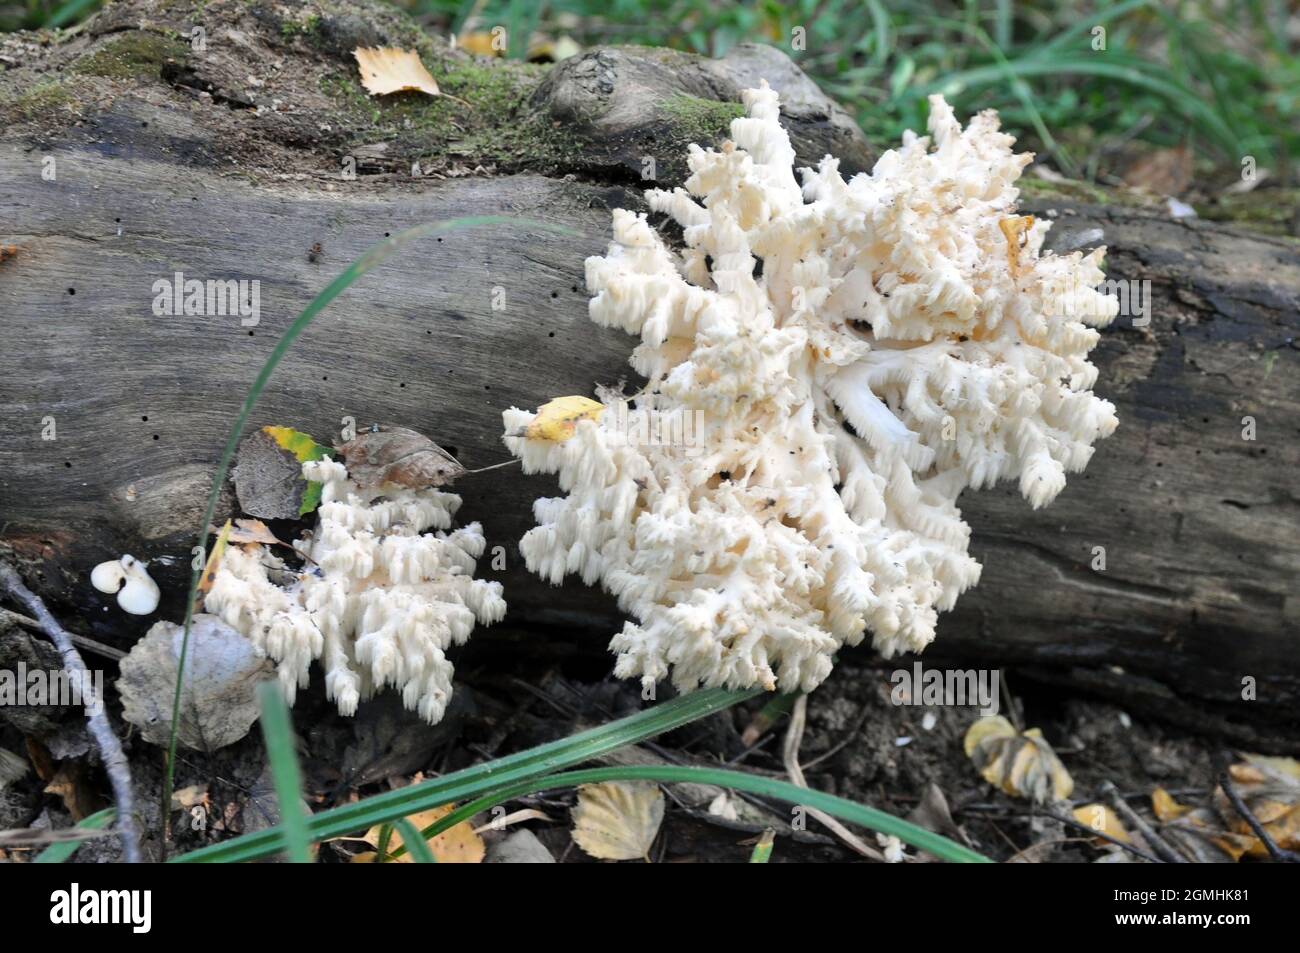 Hericium Hericium is an edible mushroom of the genus Hericium. Stock Photo